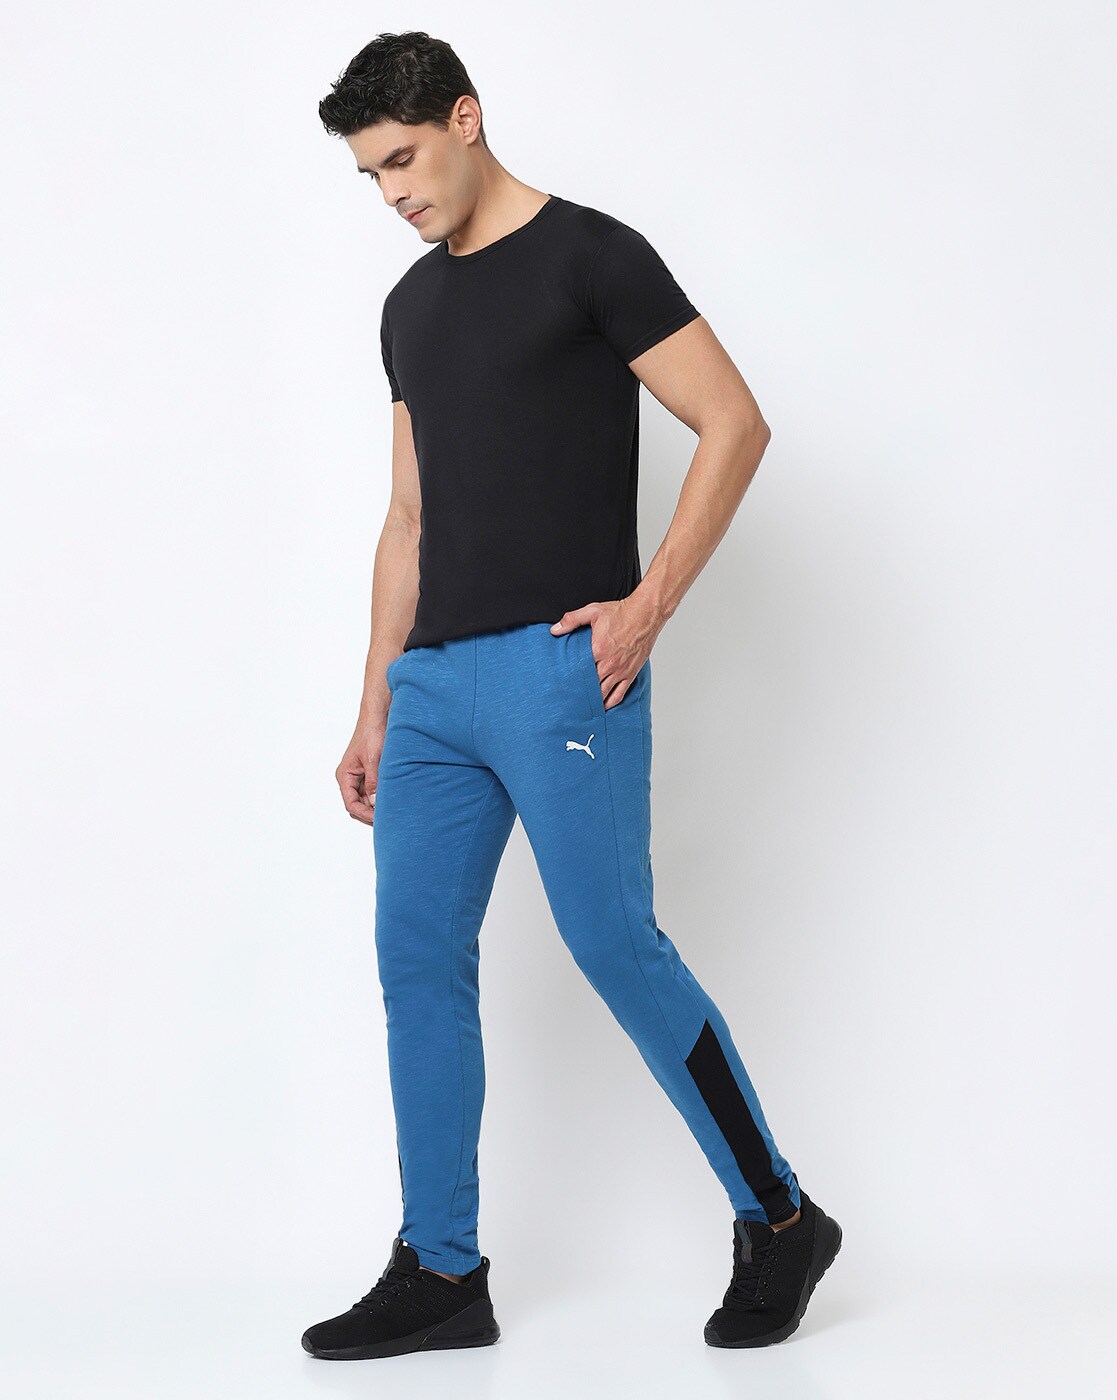 APONISH Men's Self-Design Casual Track Pant (Dark Blue) : Amazon.in:  Clothing & Accessories